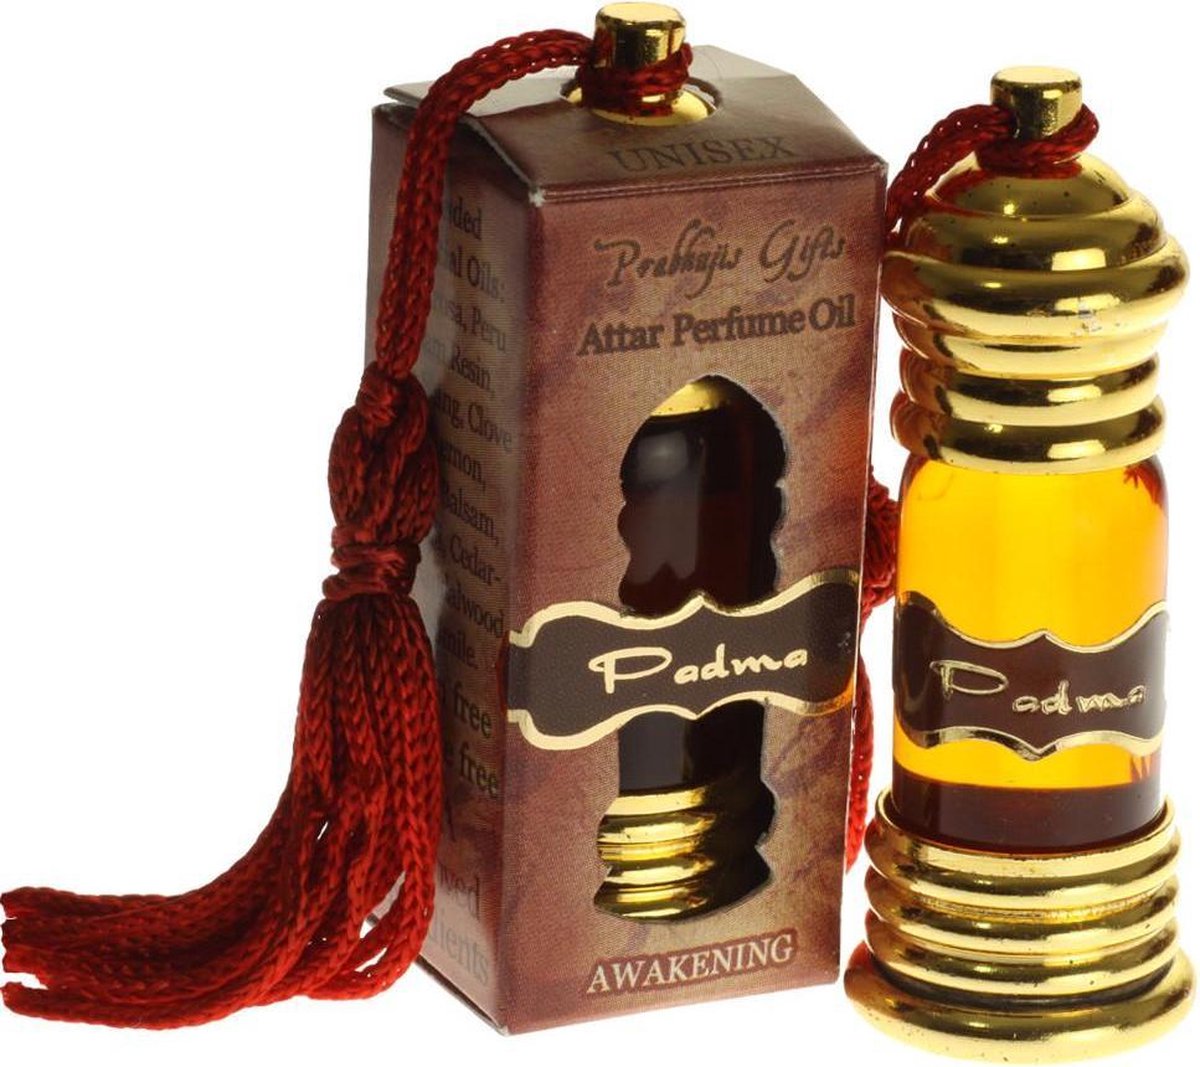 Attar parfum olie 'Padma' (ontwaken), Prabhuji's Gifts, 6 ml